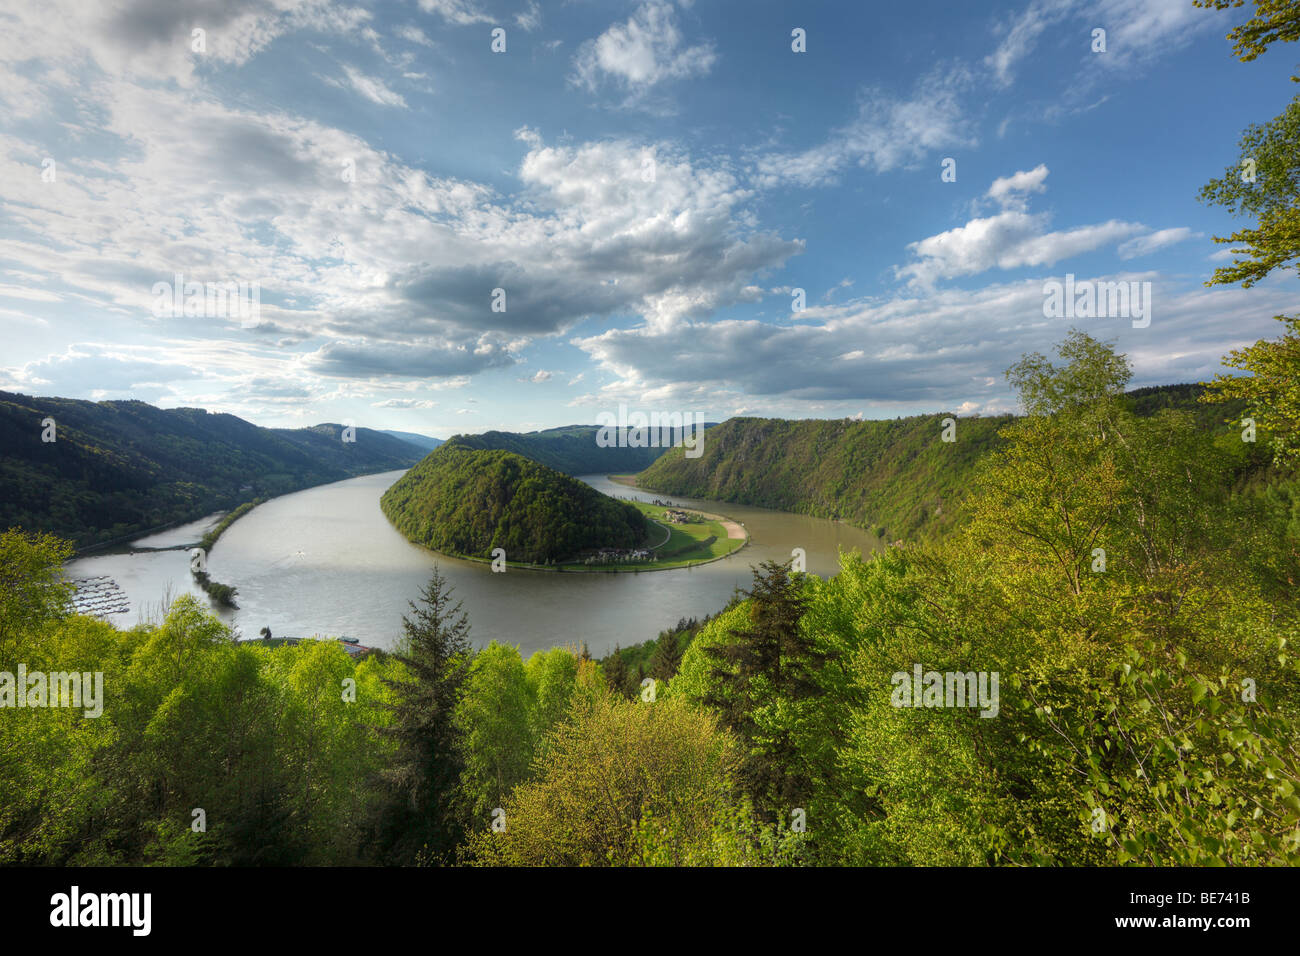 Fiume Danubio, Schloegener loop, Schloegen, Austria superiore, Austria, Europa Foto Stock